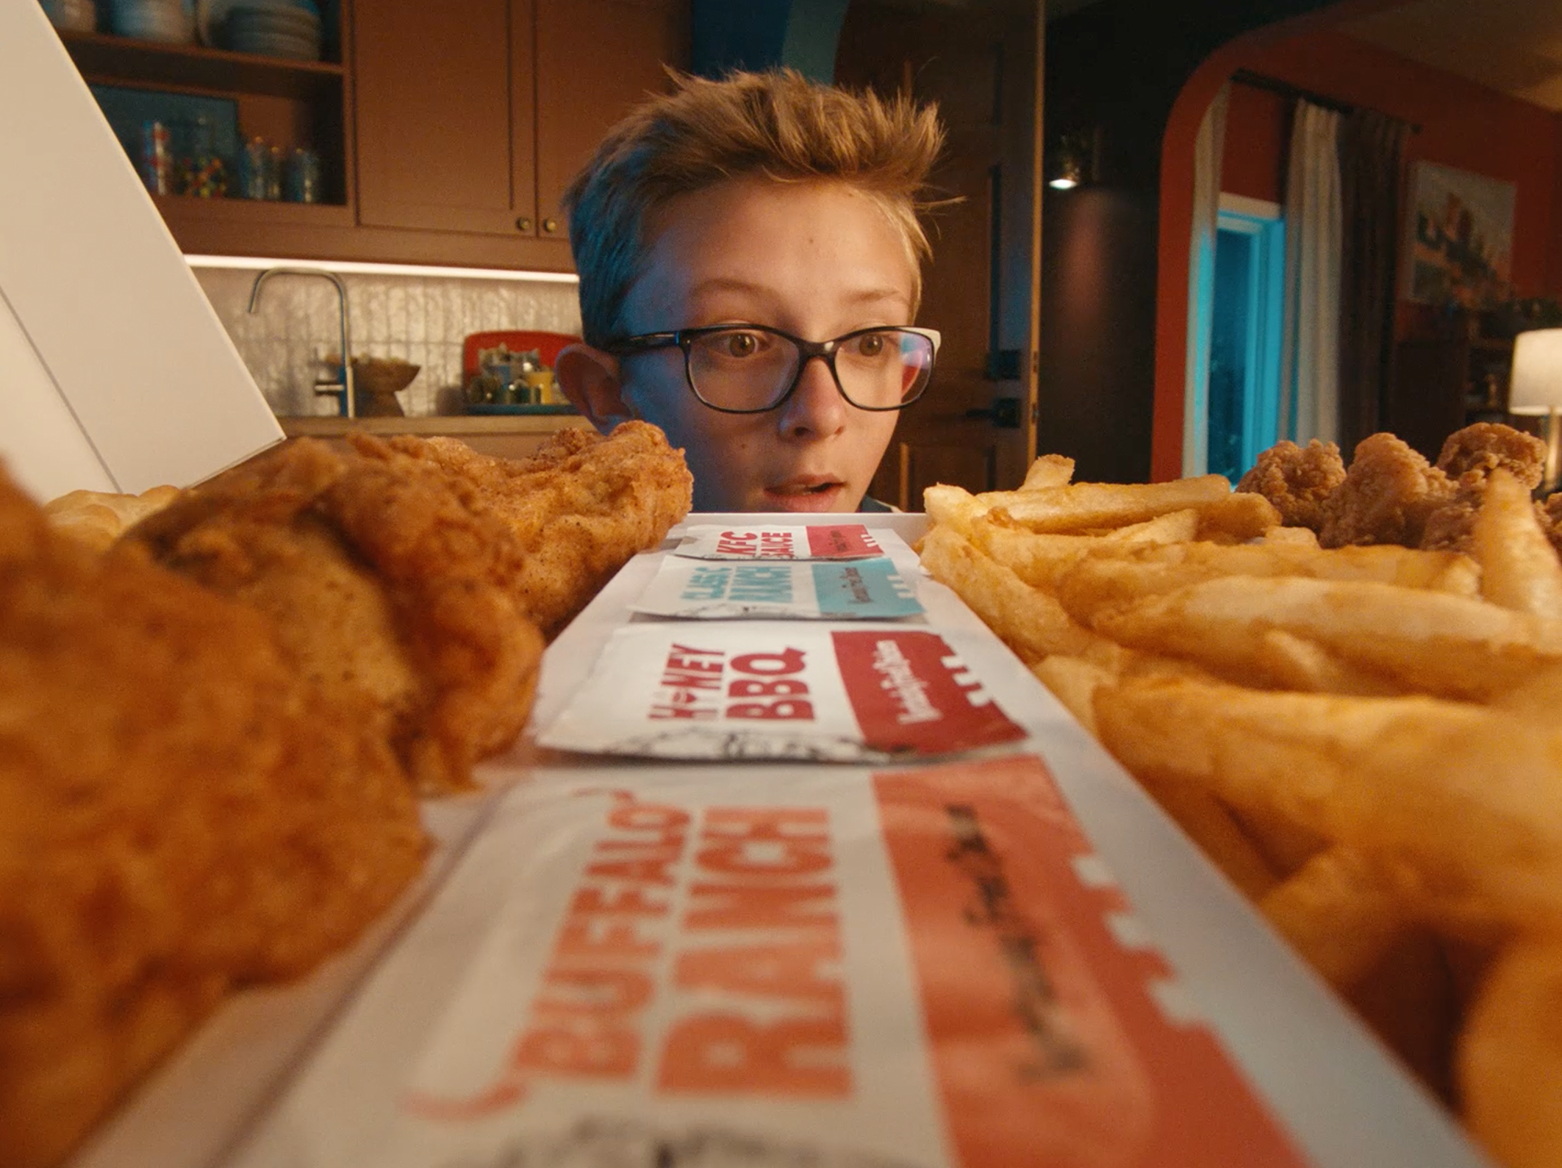 Young boy wide-eyed at KFC Fill Up Box